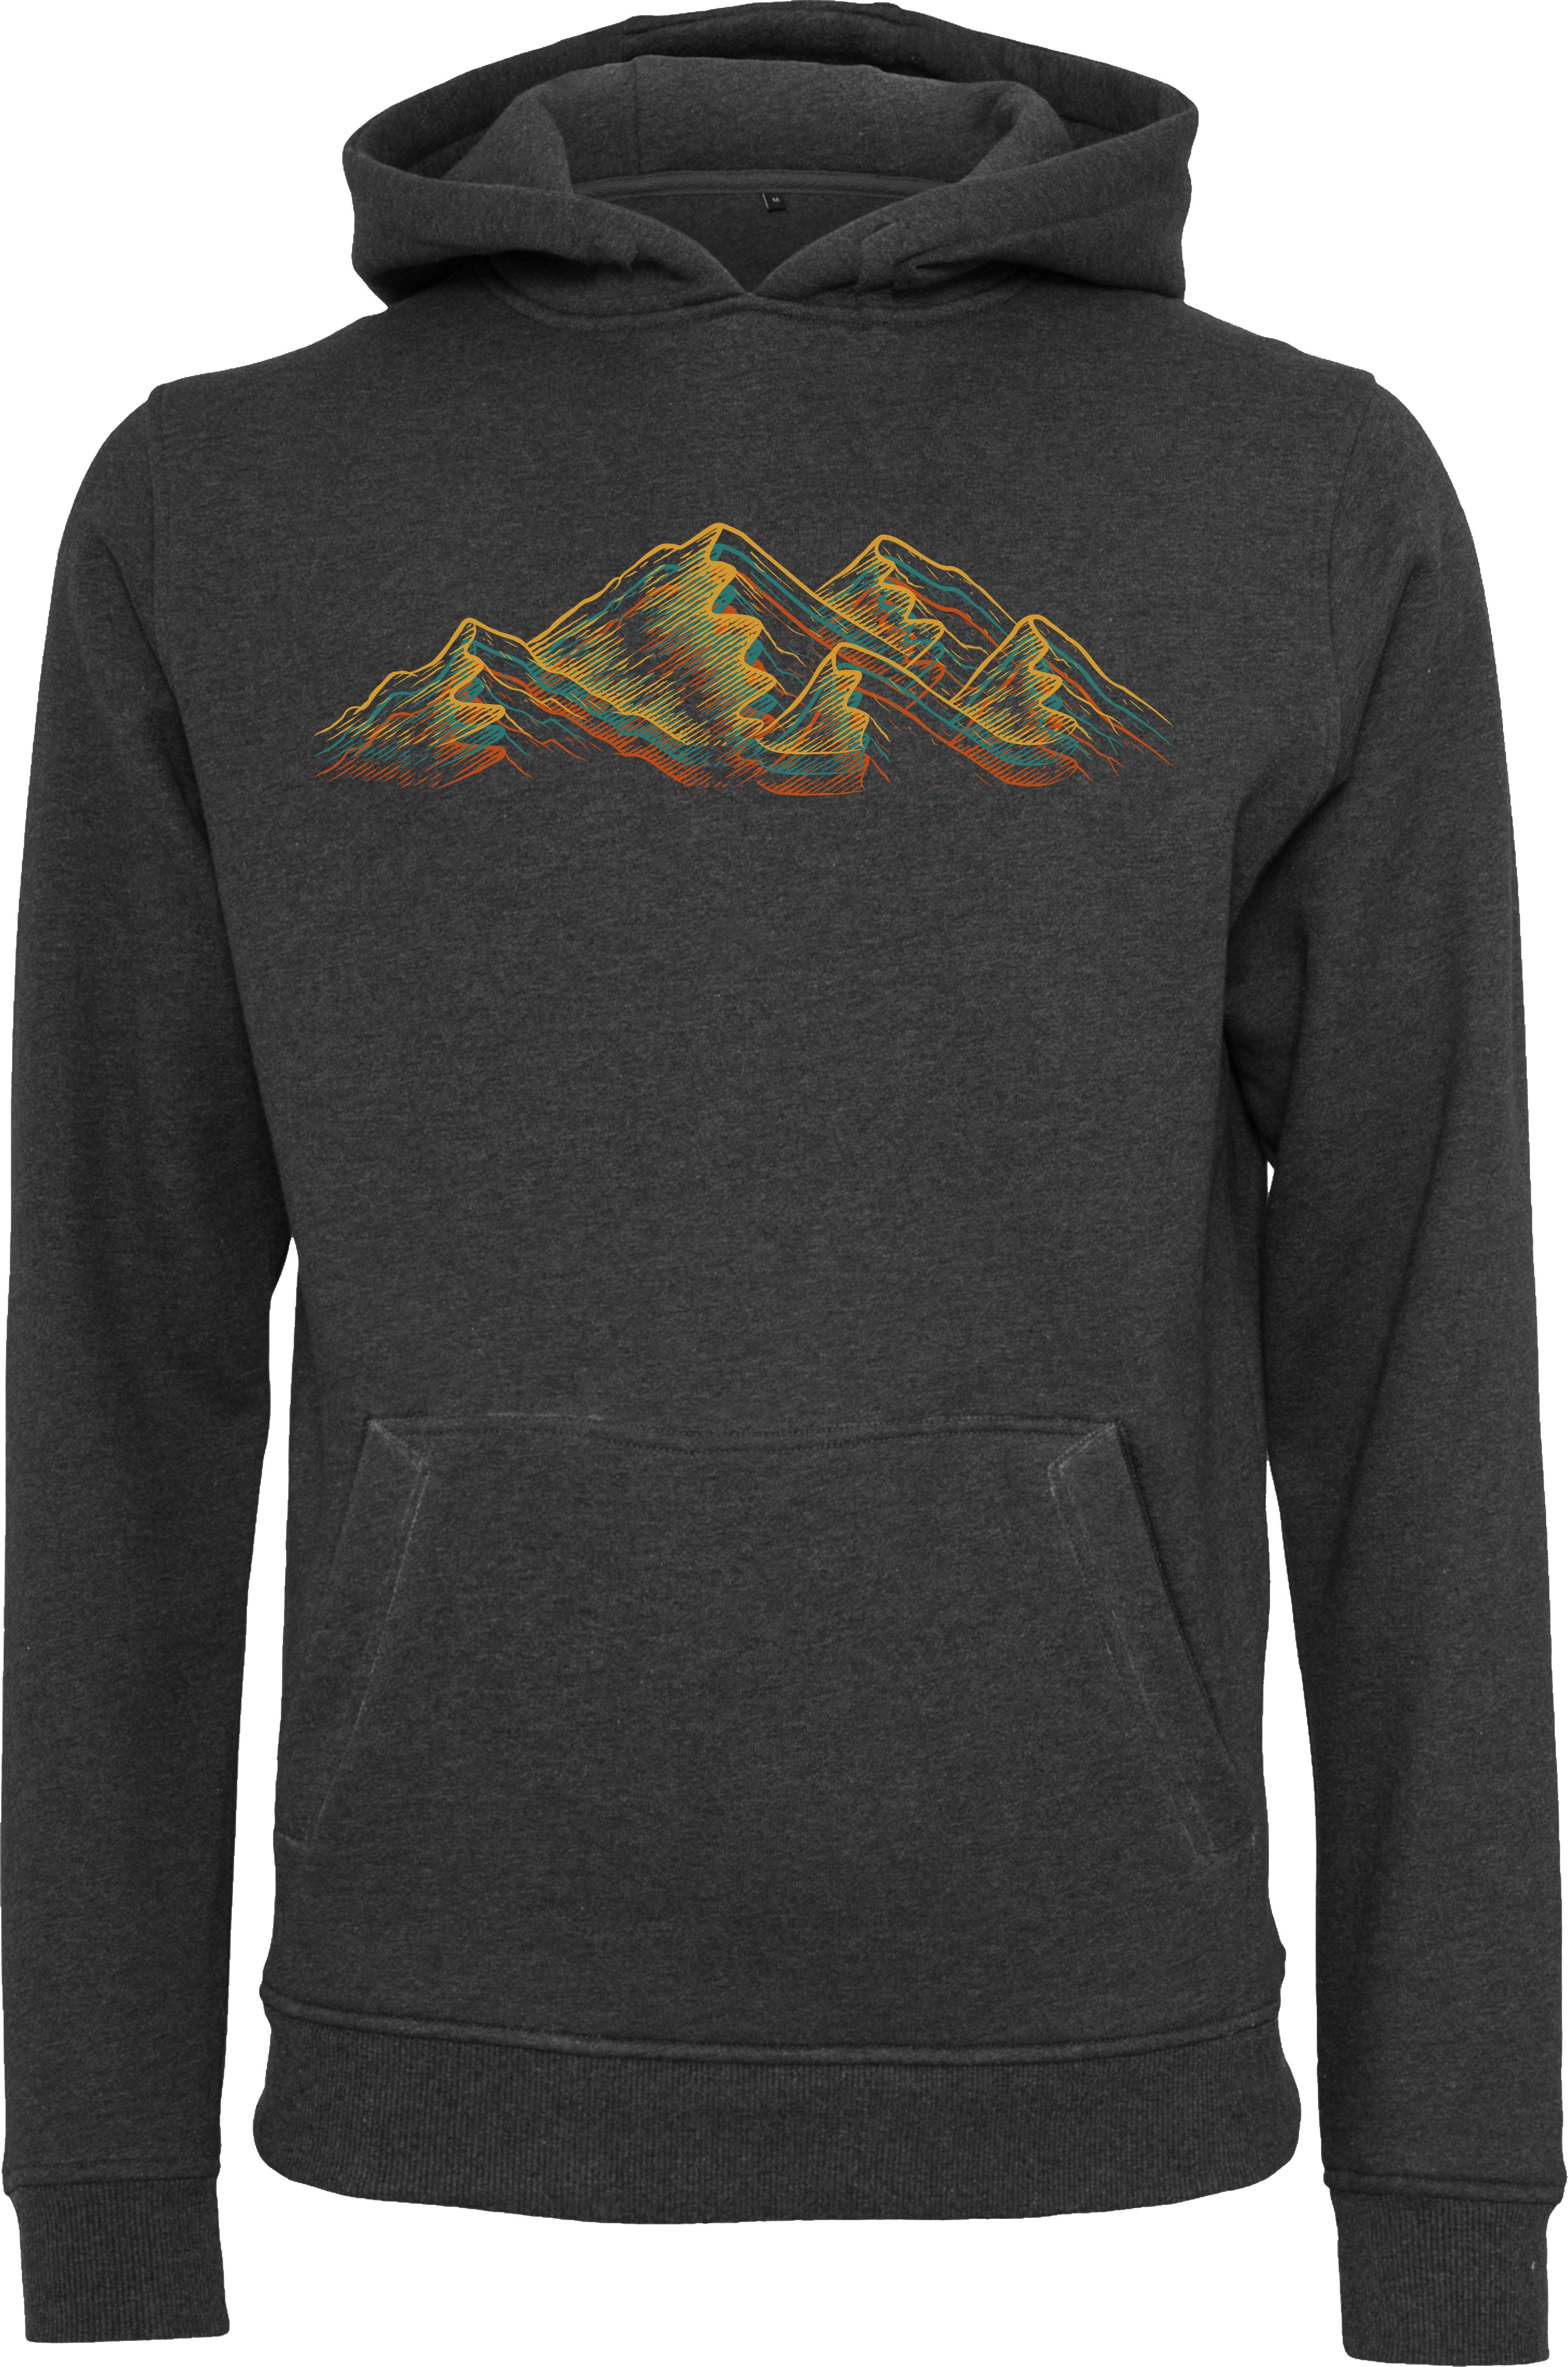 - : Kapuzenpullover Kletter hochwertiger Siebdruck Wandern Hoodie Baddery Alpen Charcoal Kleidung